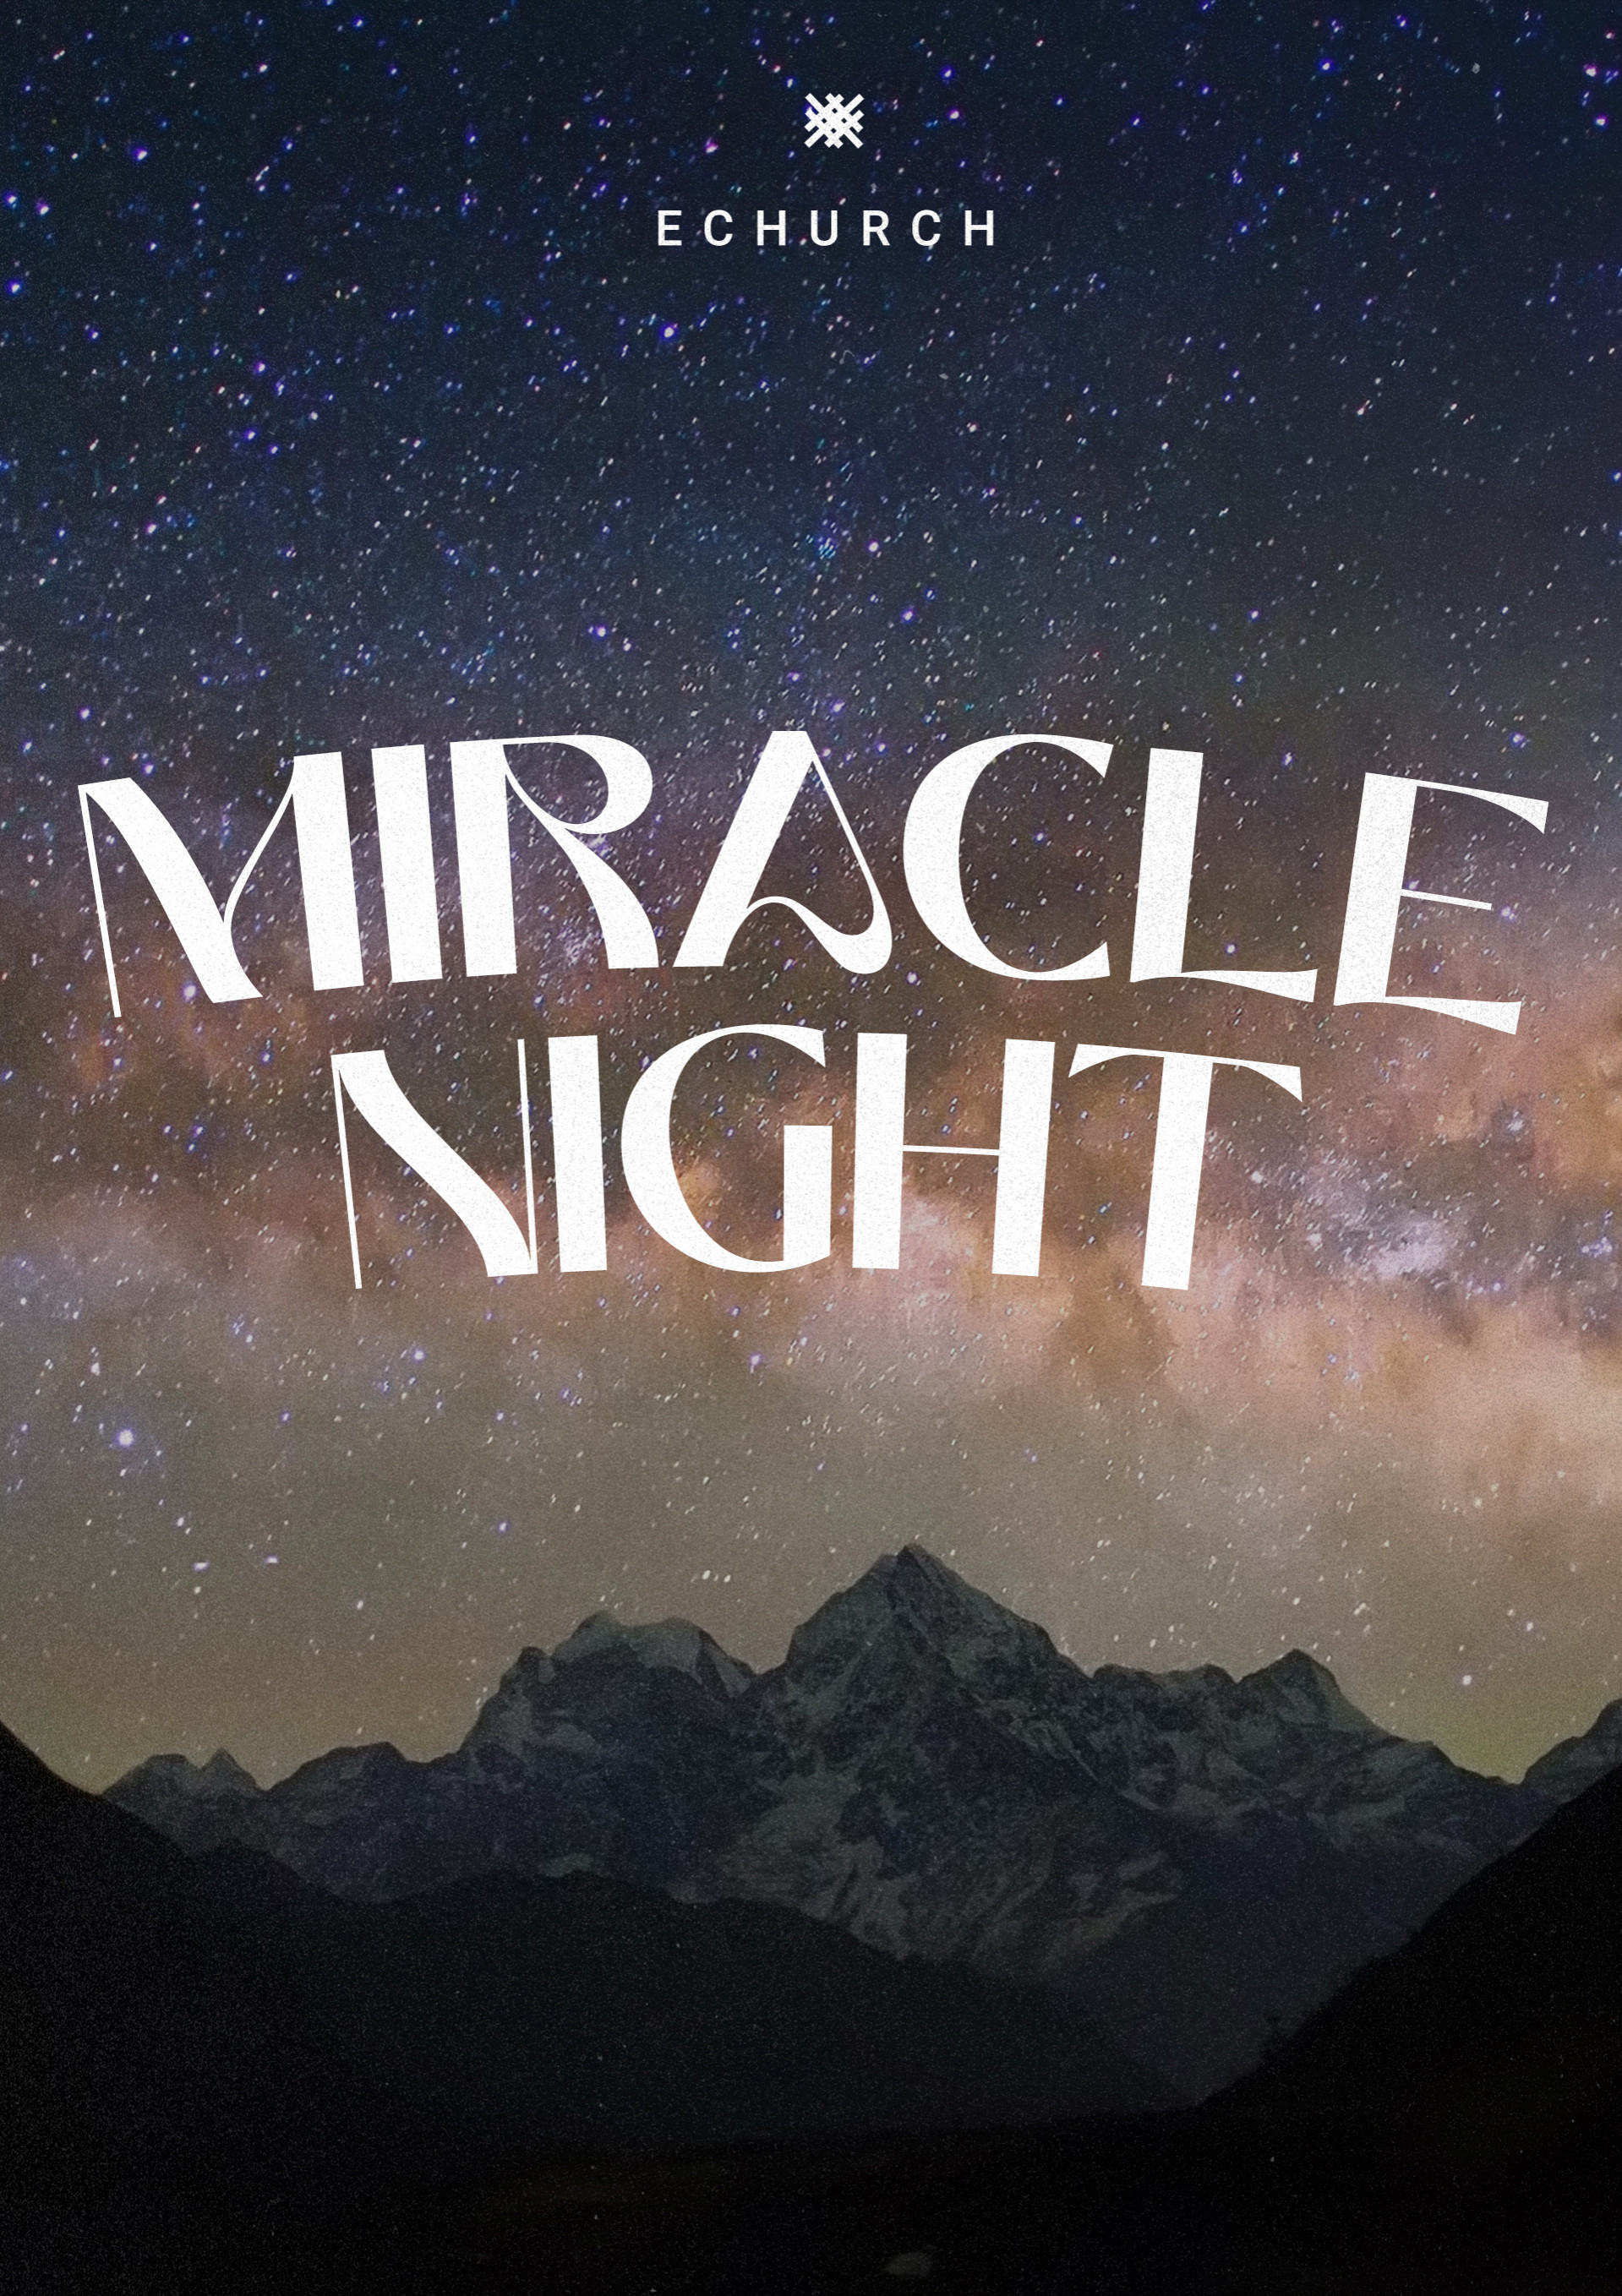 Miracle Night